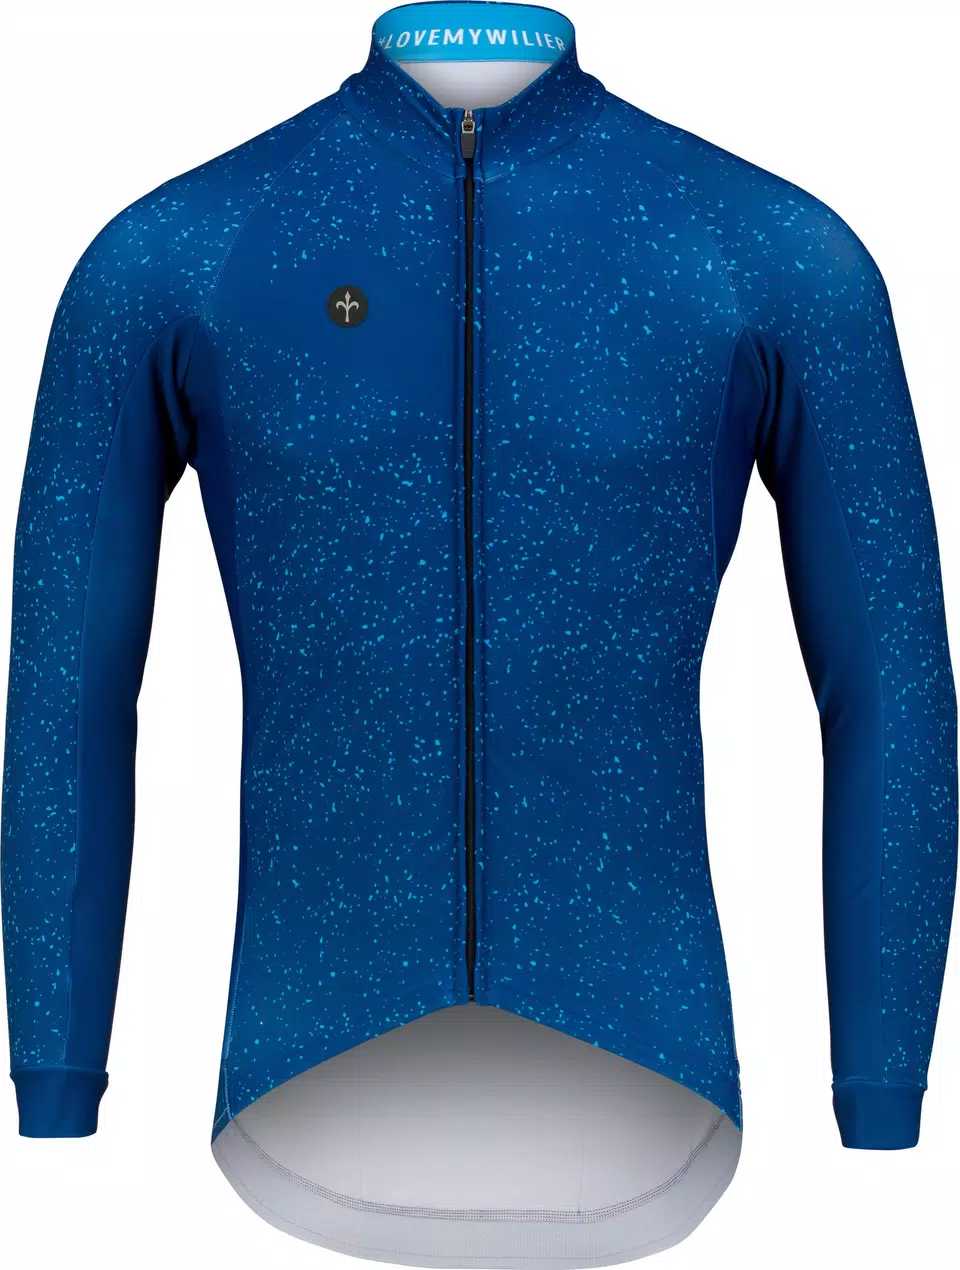 Long sleeve jersey Kosmos blue